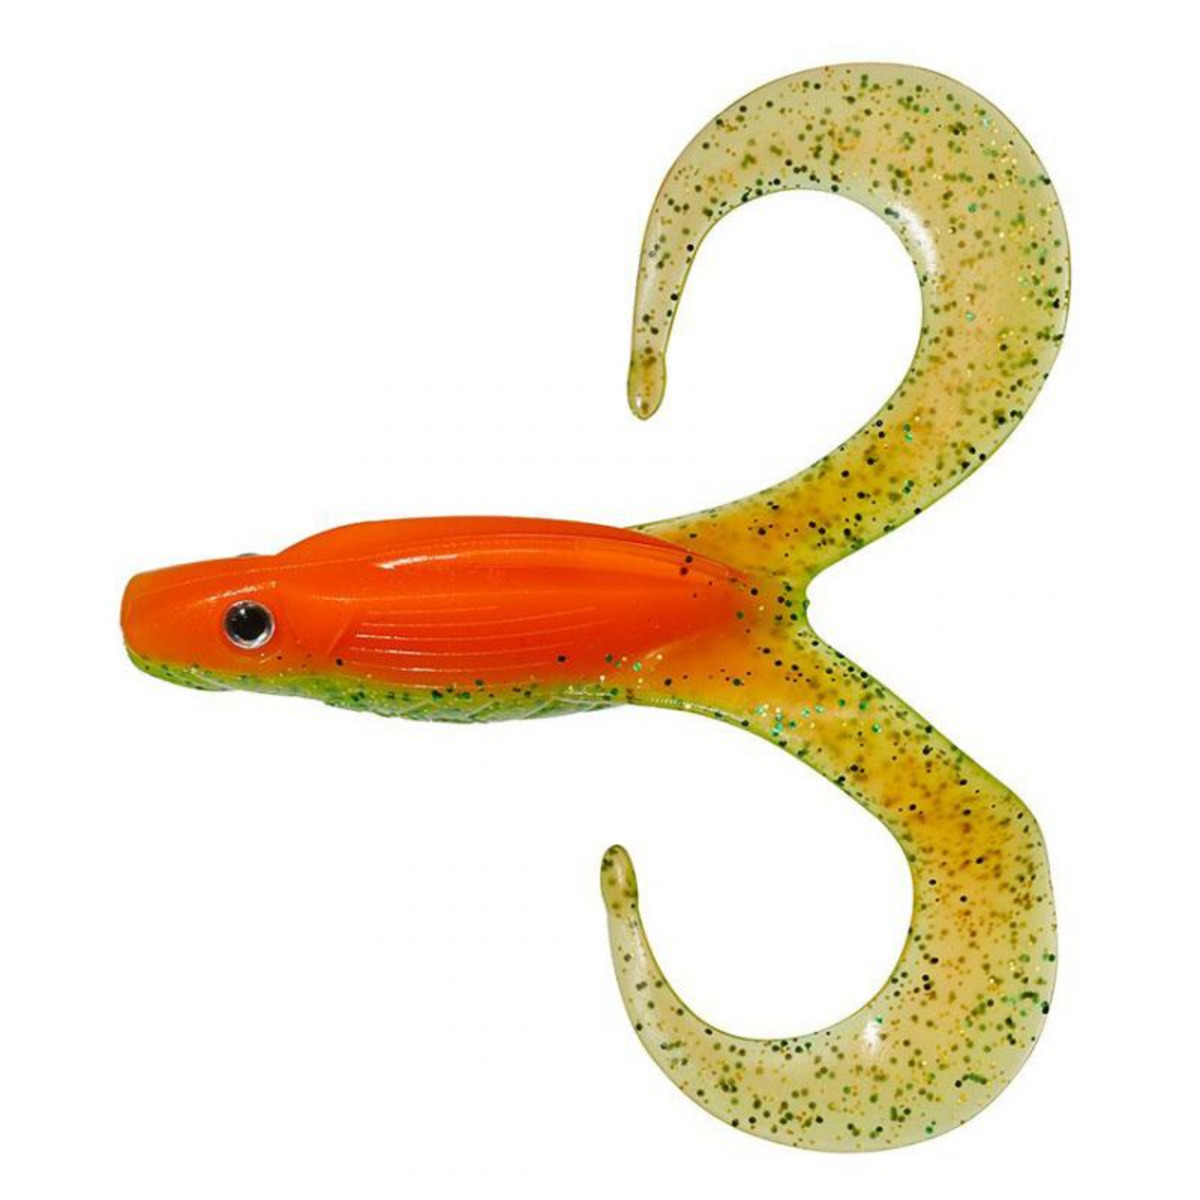 Gunki Ls Grubby Frog - 6.5 g - 7 cm - Orange Chart Belly